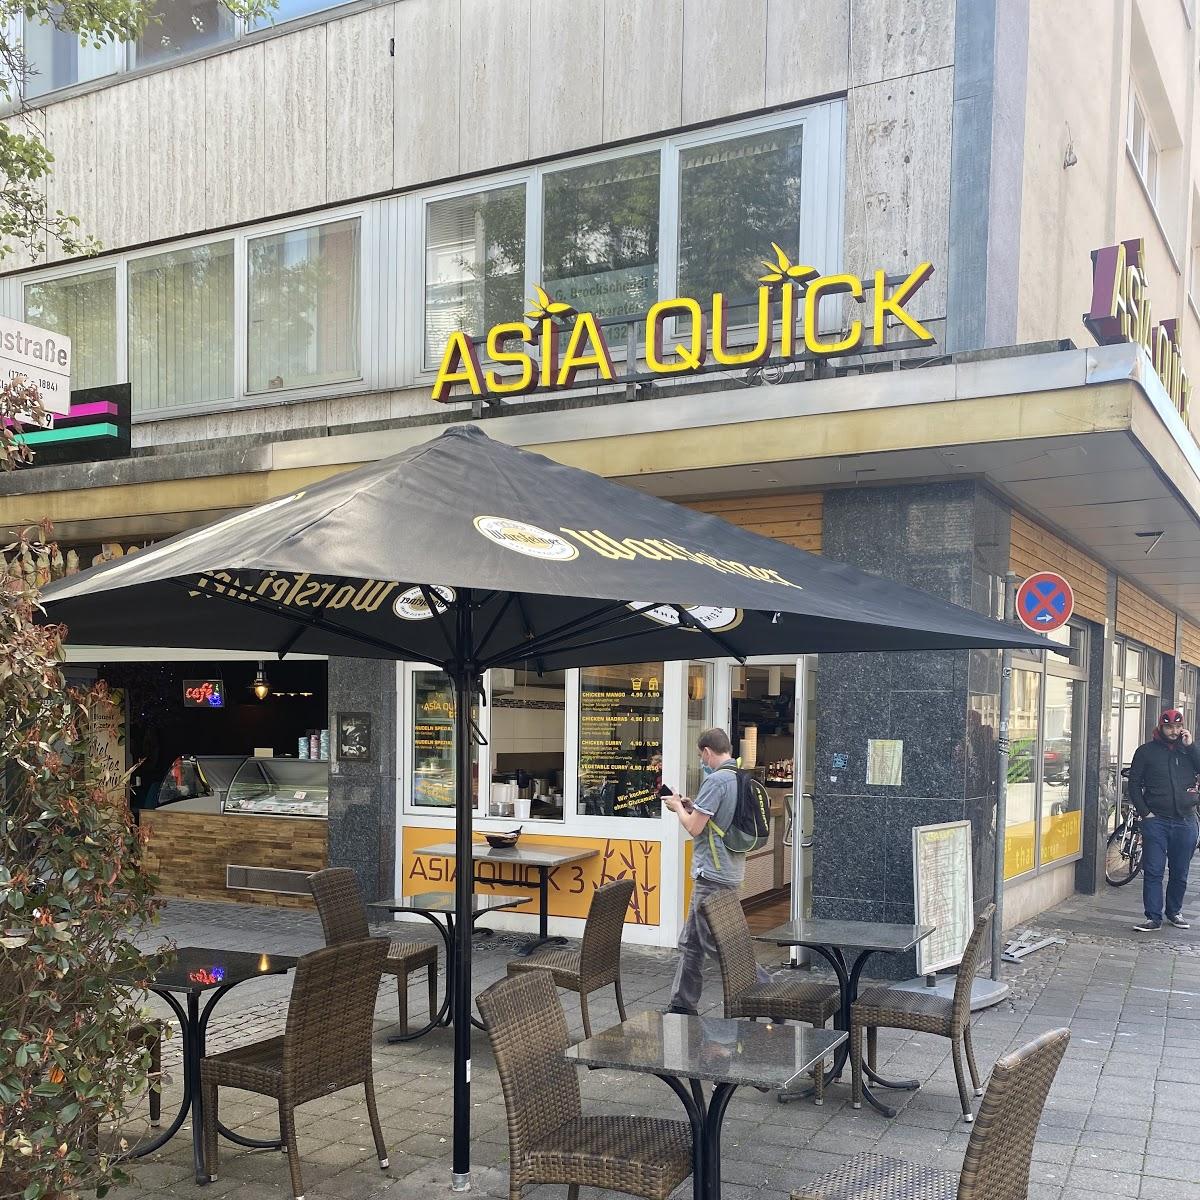 Restaurant "Asia Quick 3" in Münster